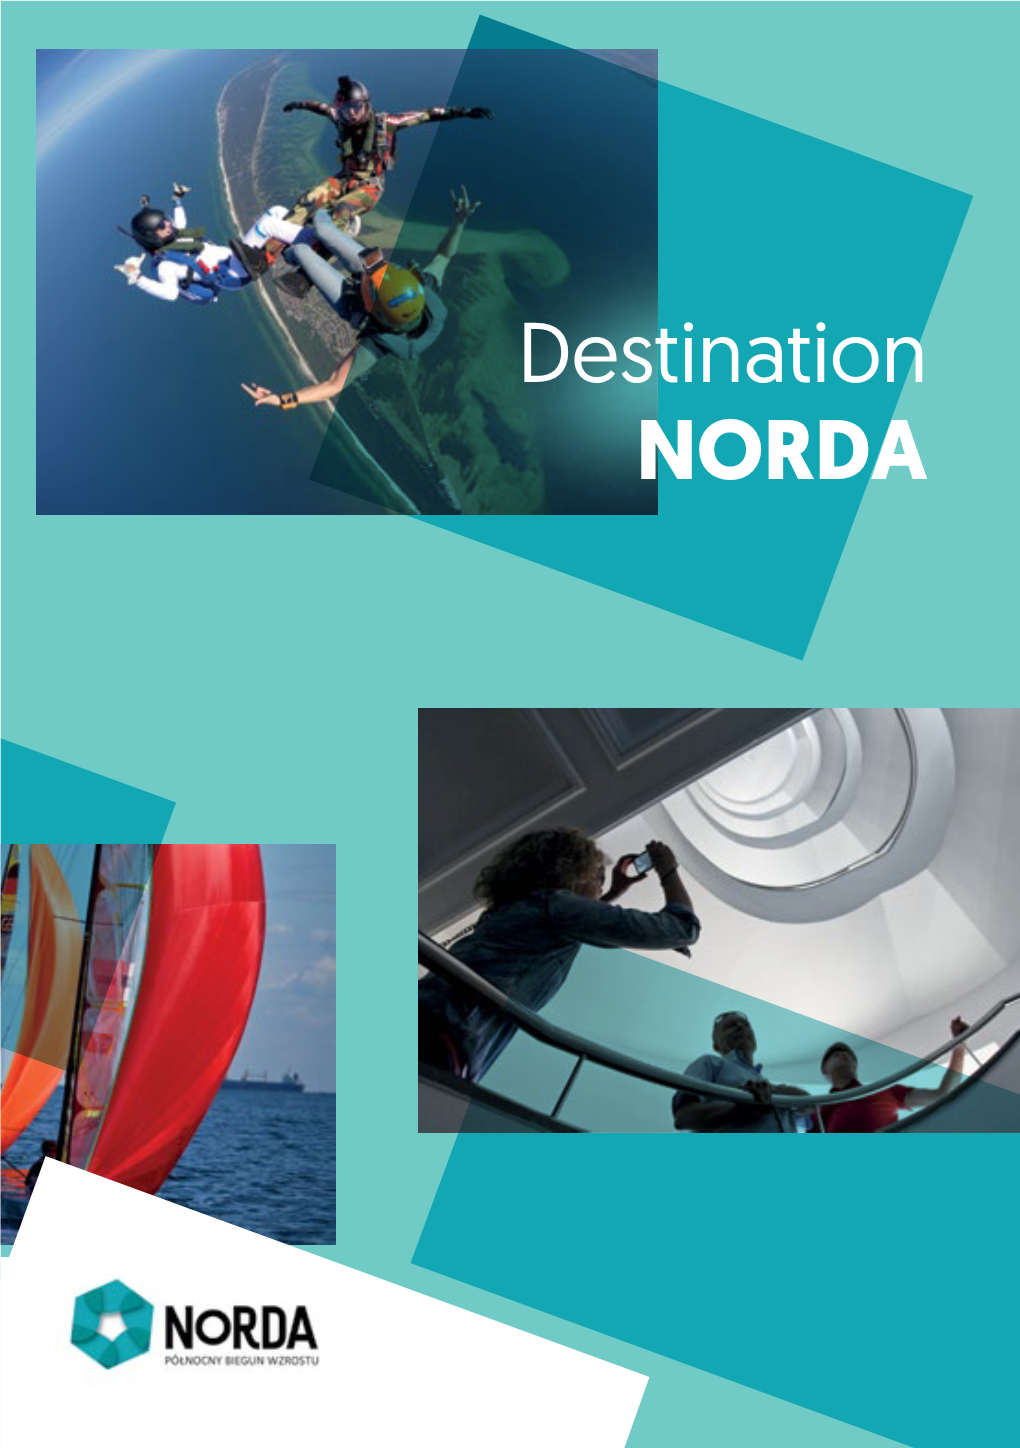 Destination NORDA